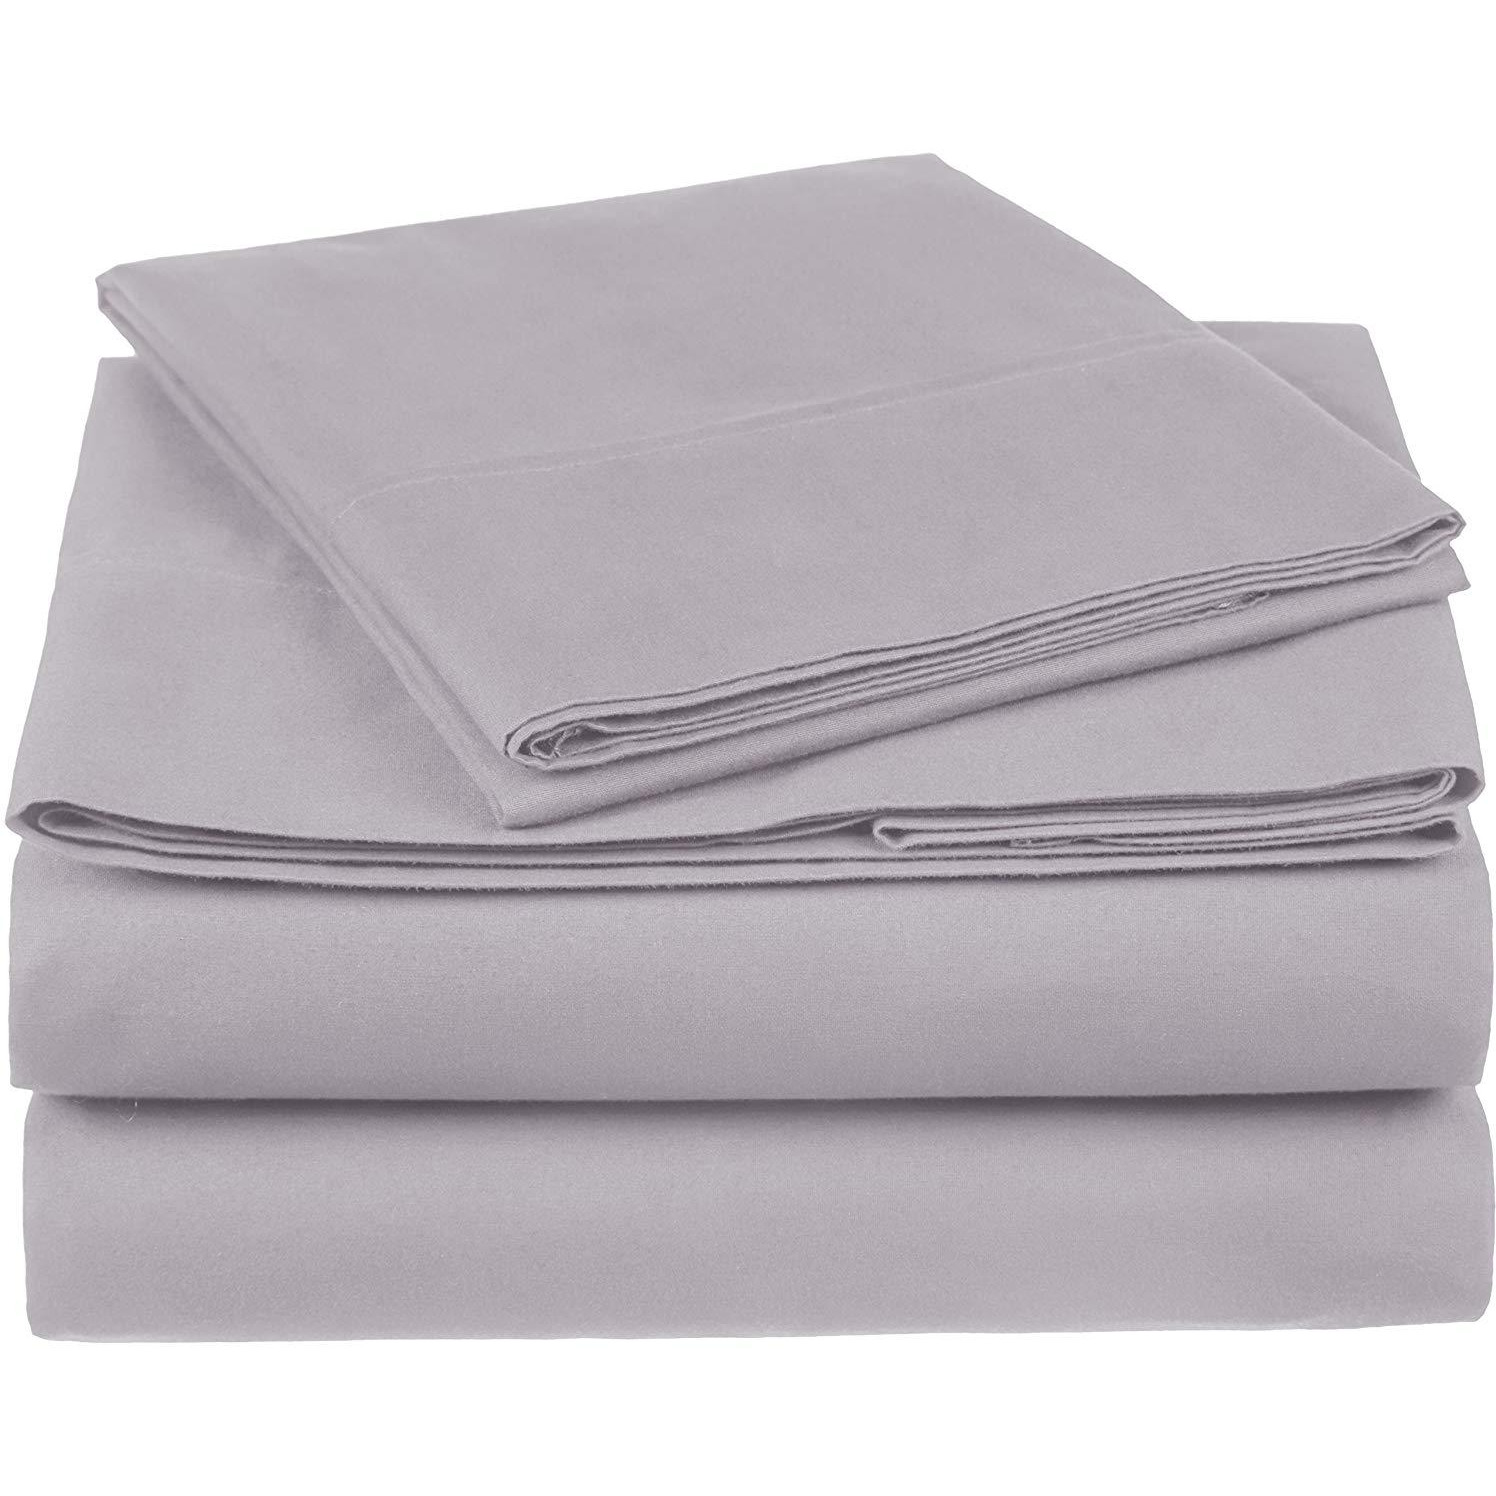 100% Cotton Sheet Set - 400 Thread Count (Piece:6 PIECE, Size:KING, Color:GREY)